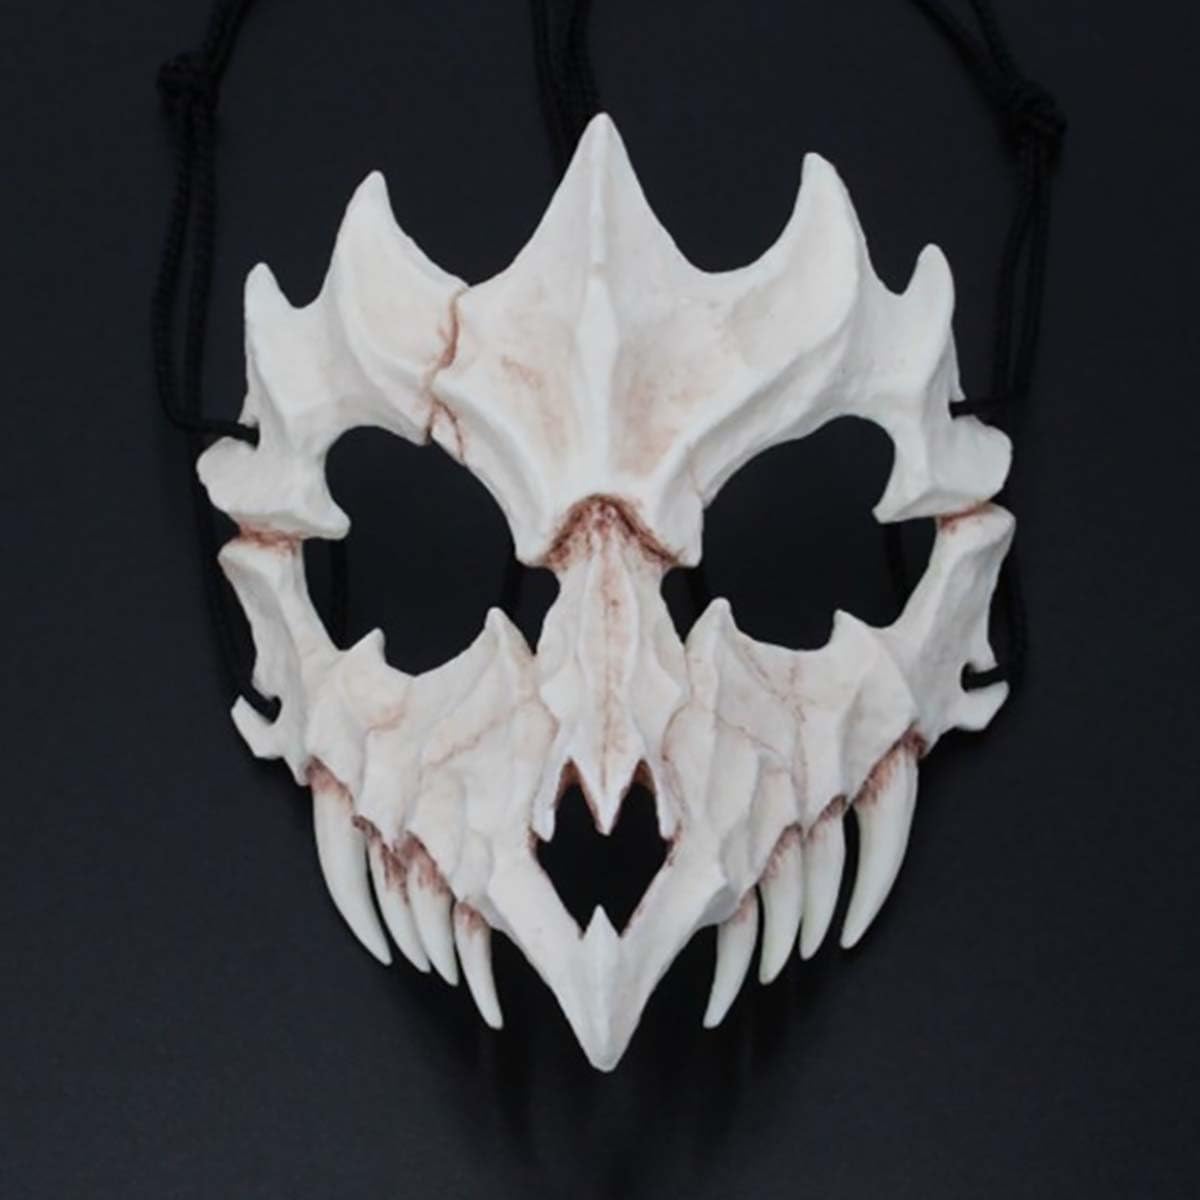 Bulex Halloween Japanese Half Mask - Tiger Mask,Ye Dragon God Black Bone Masks, Resin Skull Scary Horror Ninja Mask Costume Props, 5.7*11.8 Inch